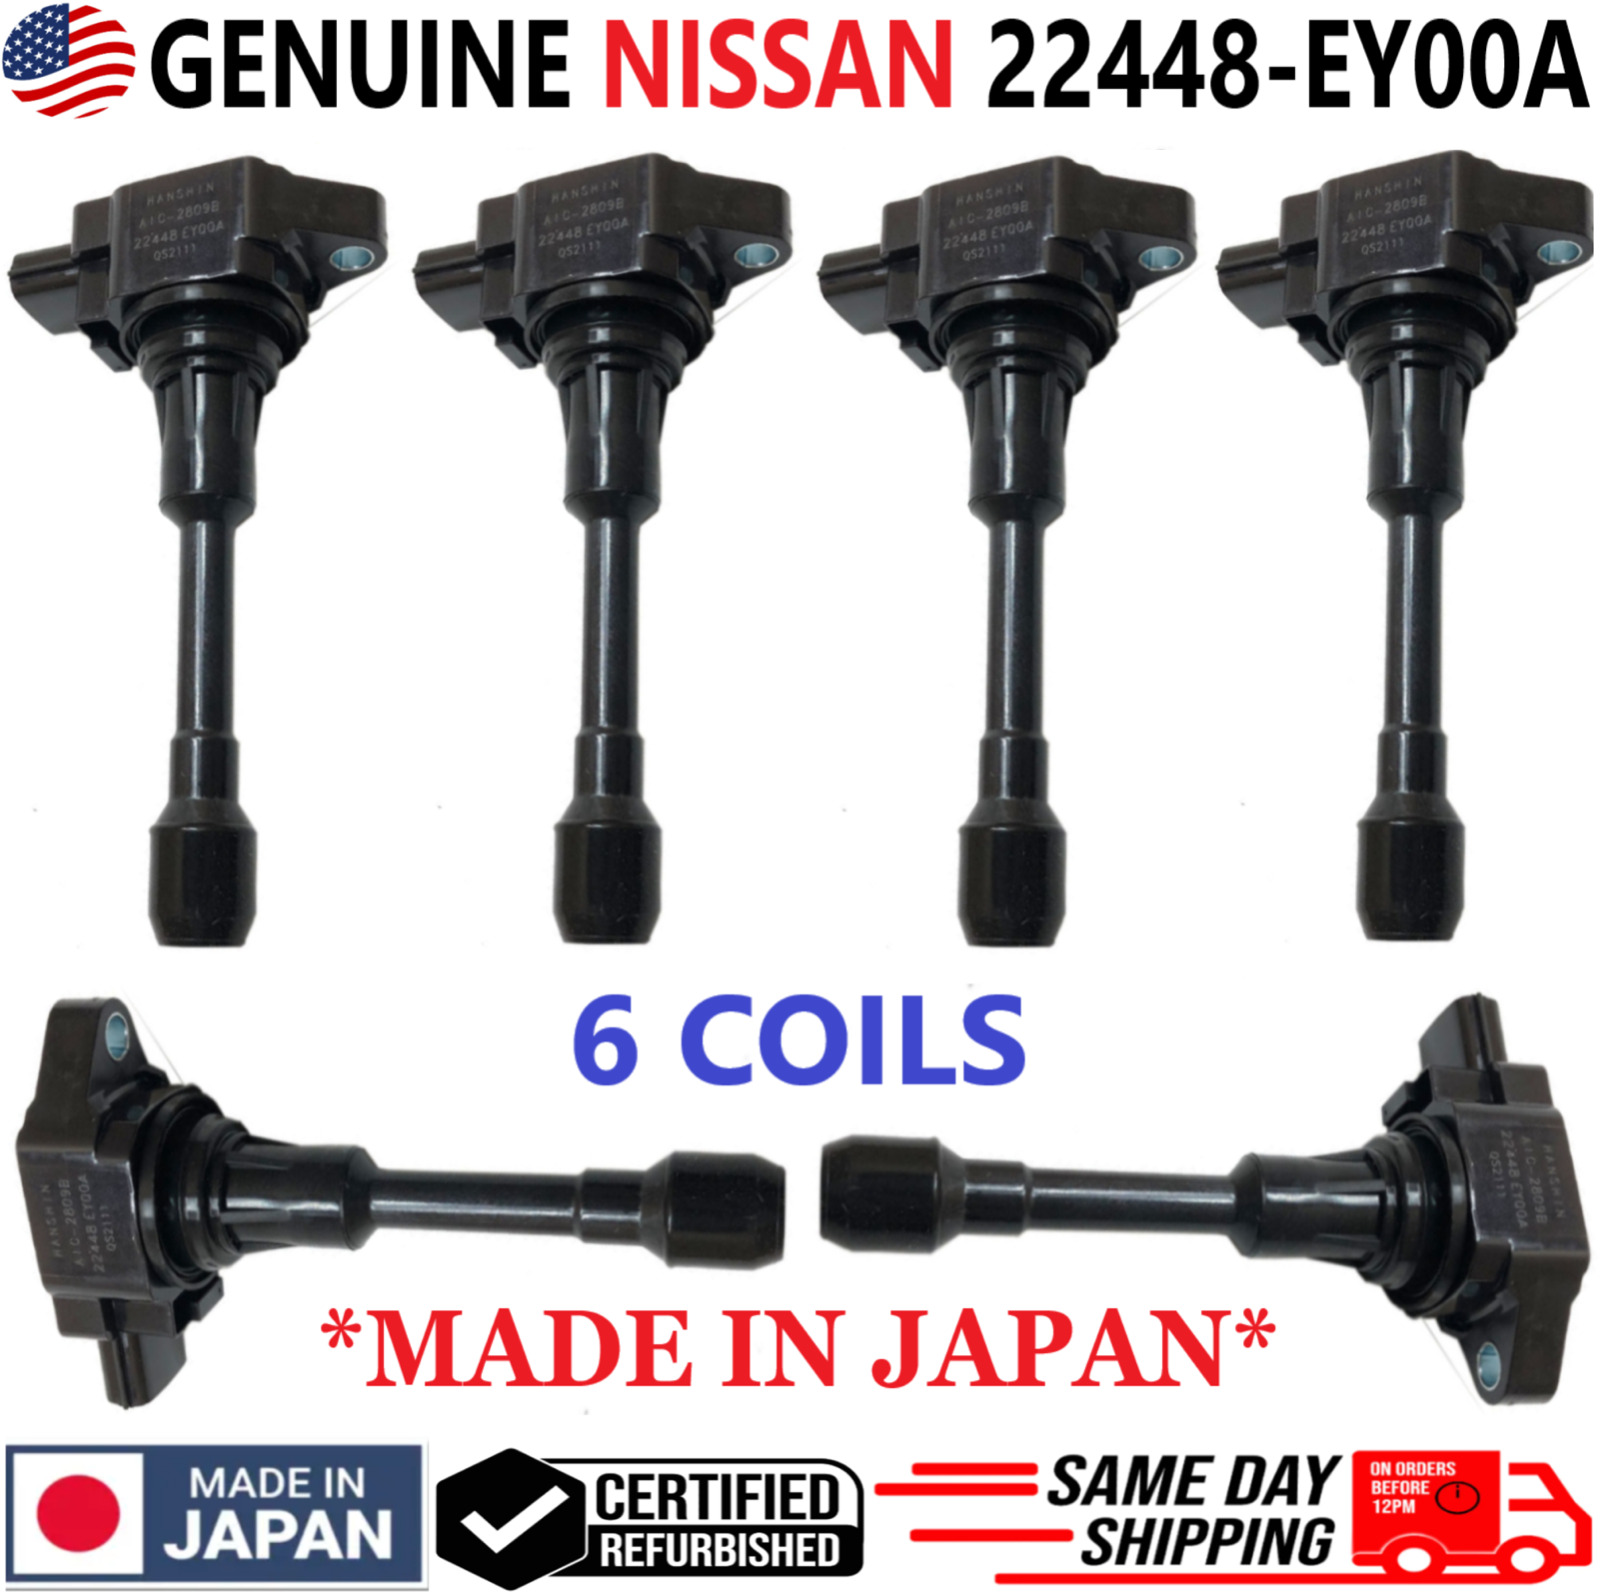 OEM NISSAN Ignition Coils For 2008-2017 Infiniti & Nissan 3.7L V6, 22448-EY00A